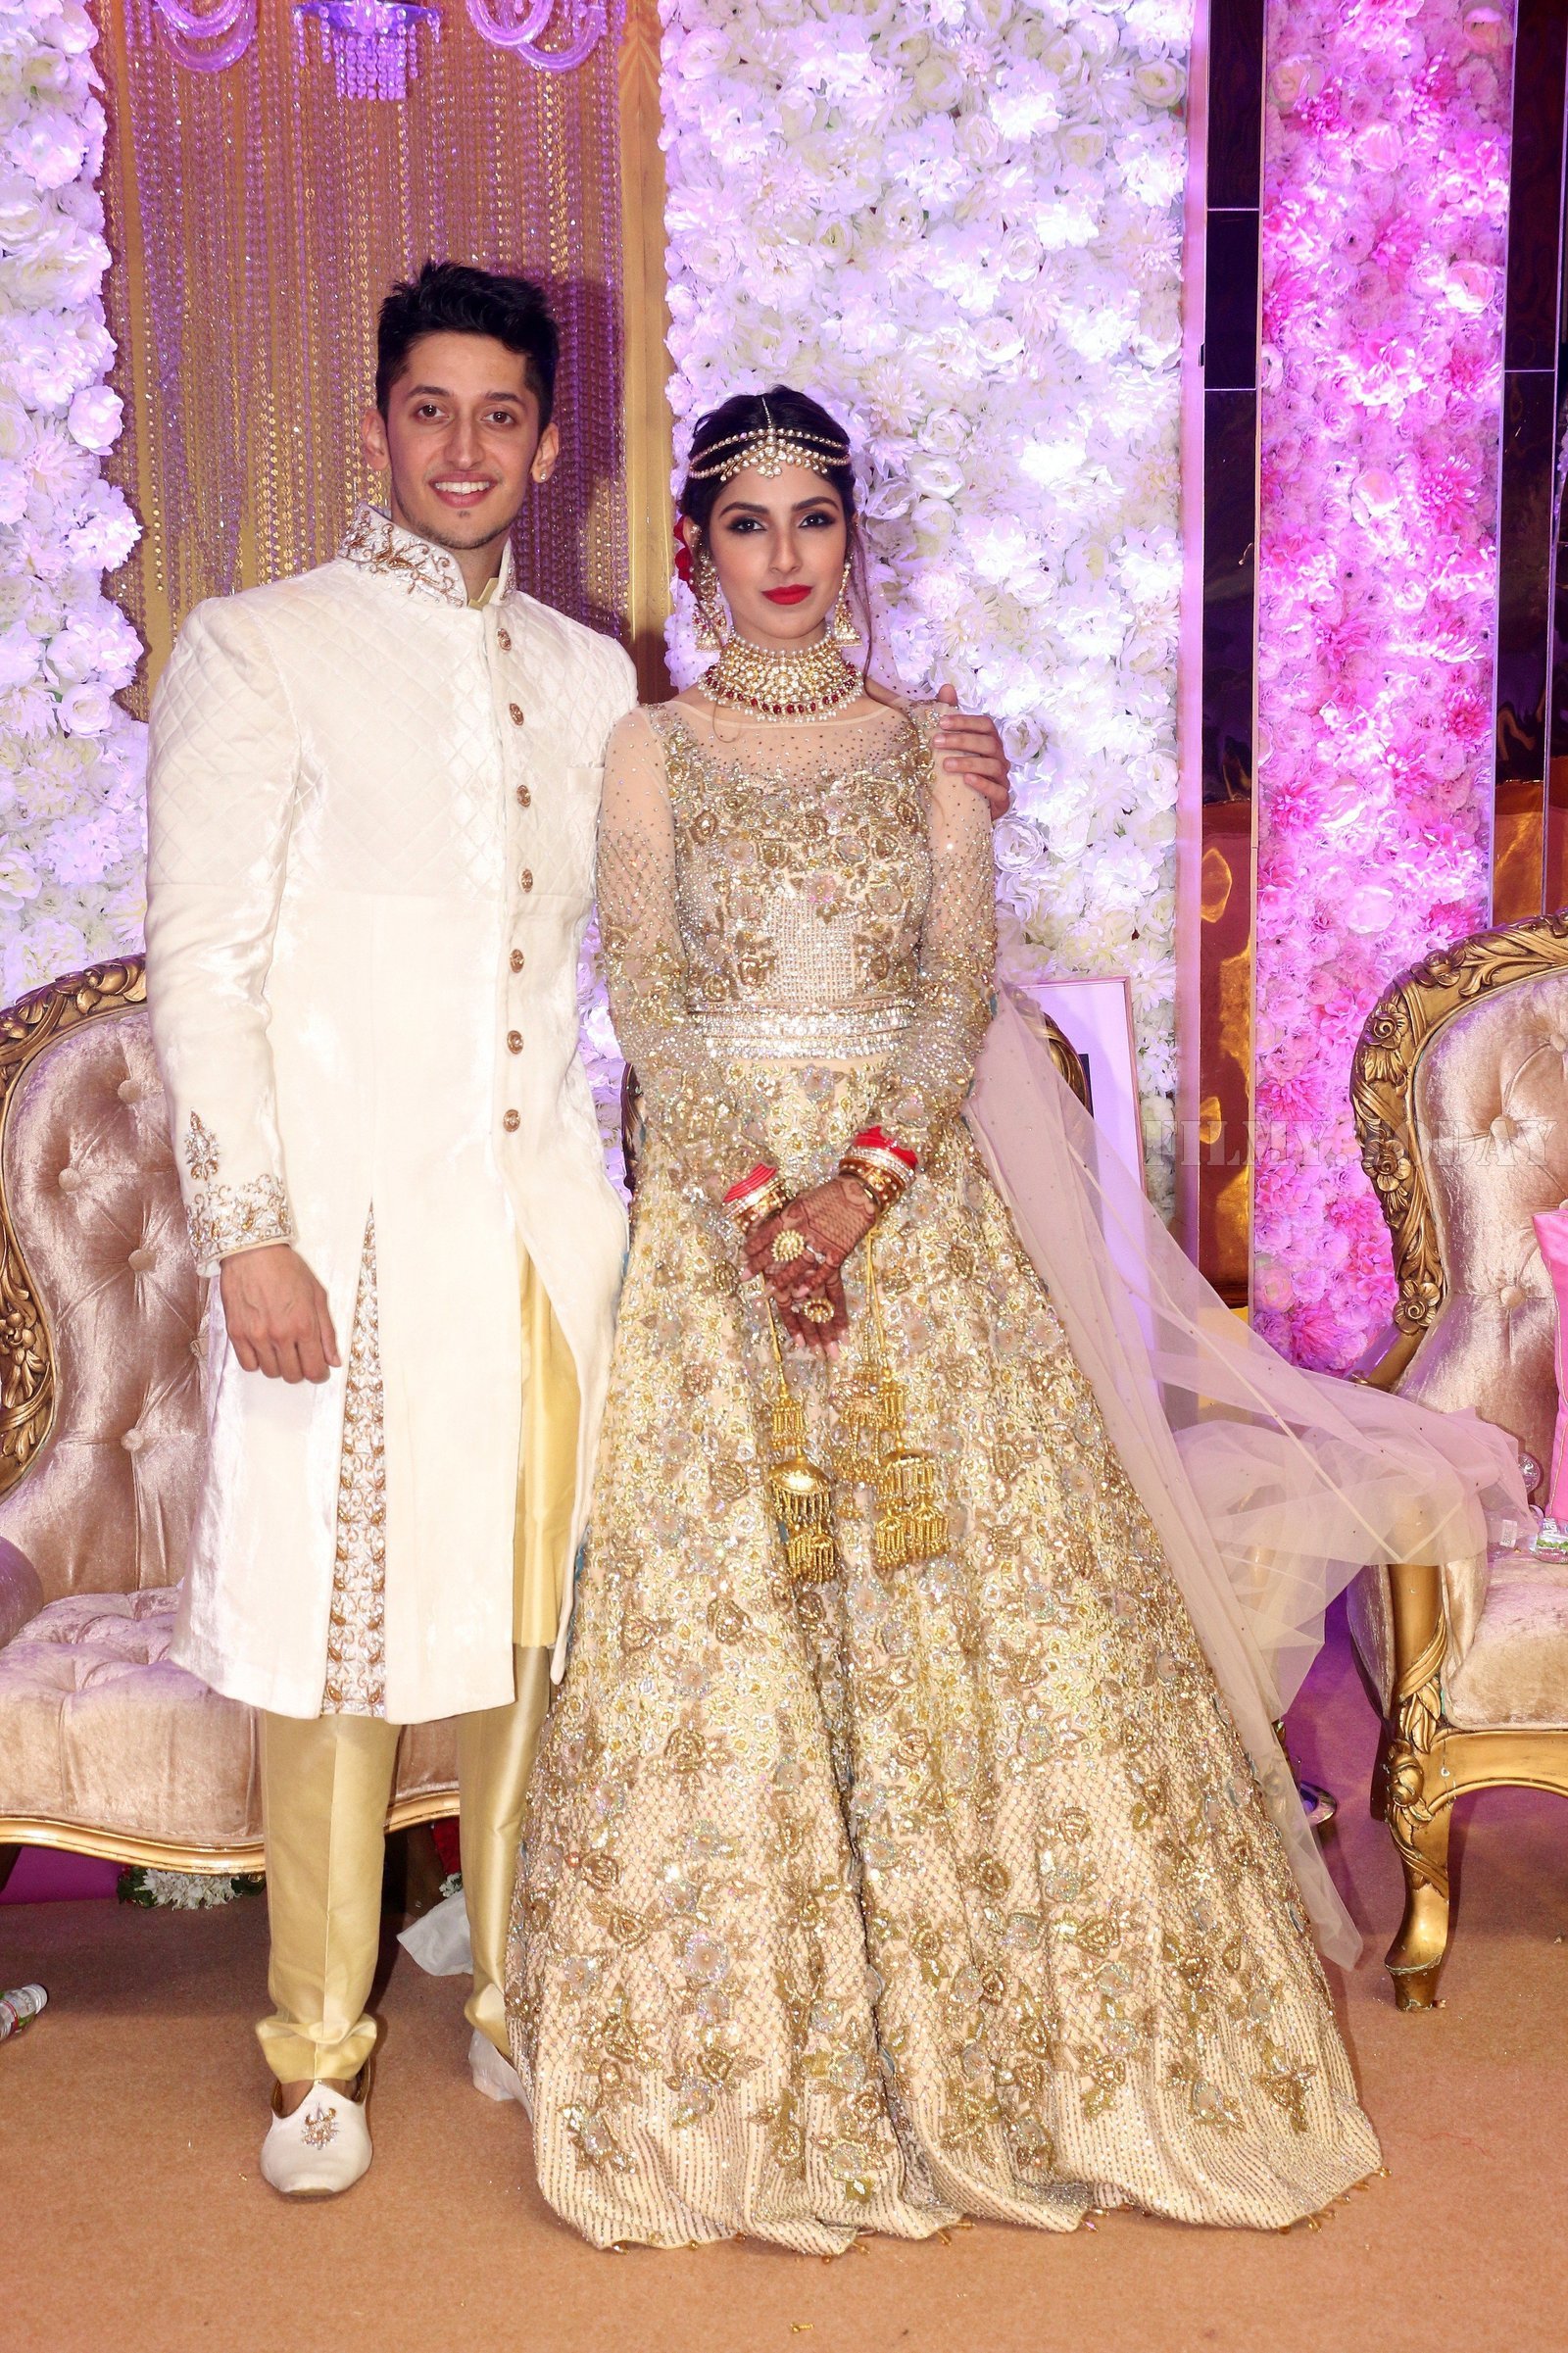 Photos: Azhar Morani & Tanya Seth Wedding Reception | Picture 1625755